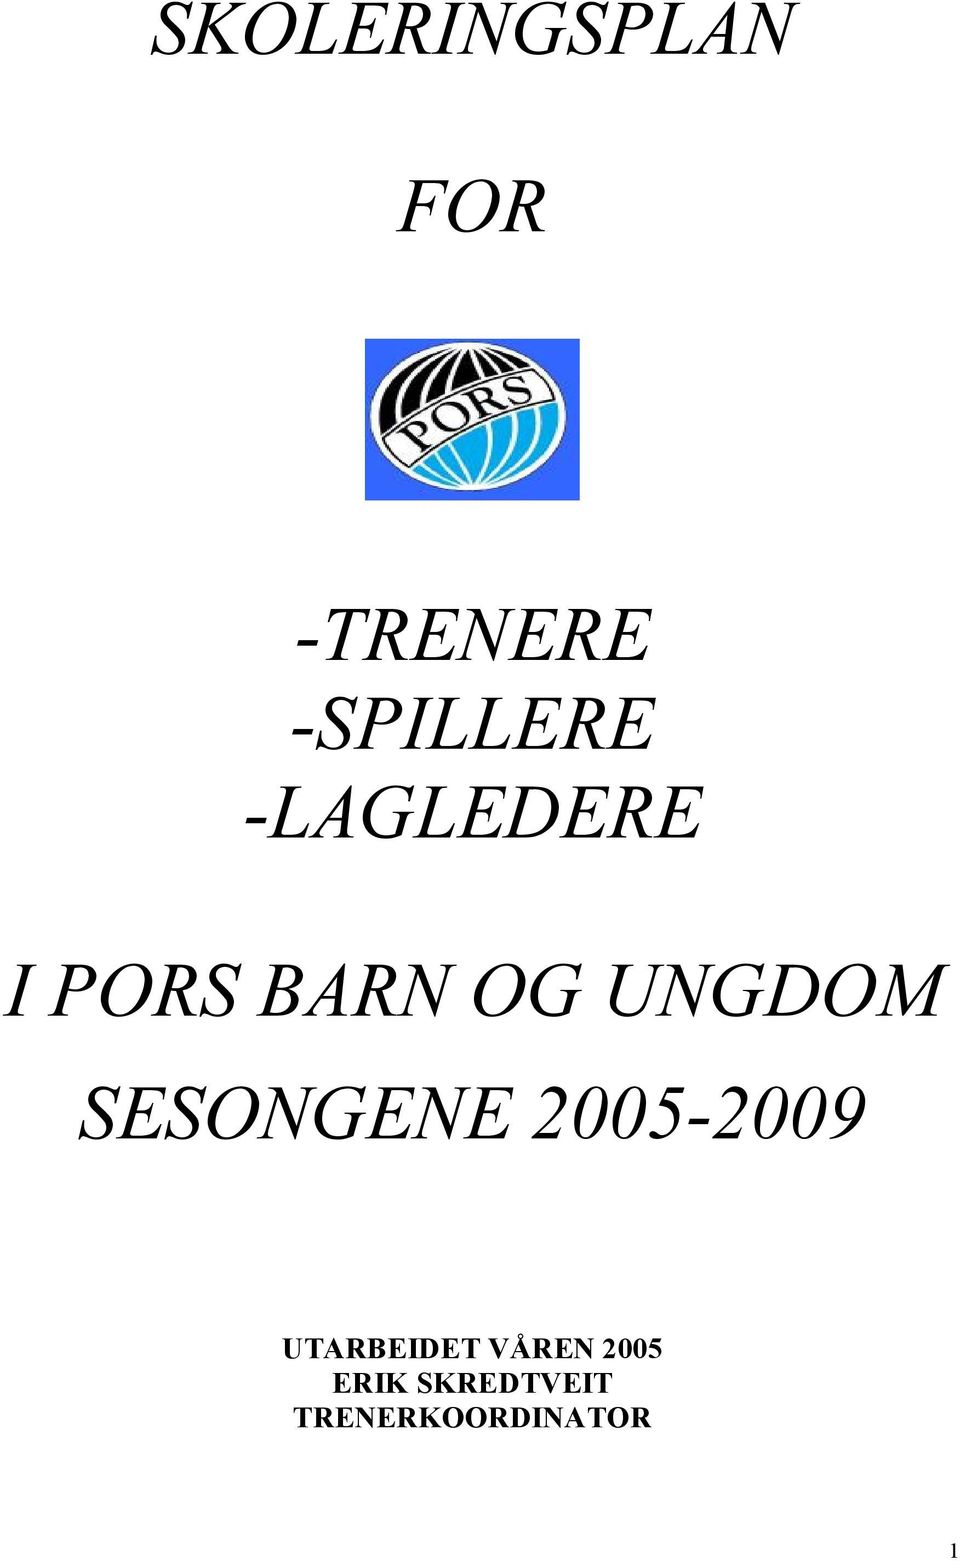 UNGDOM SESONGENE 2005-2009